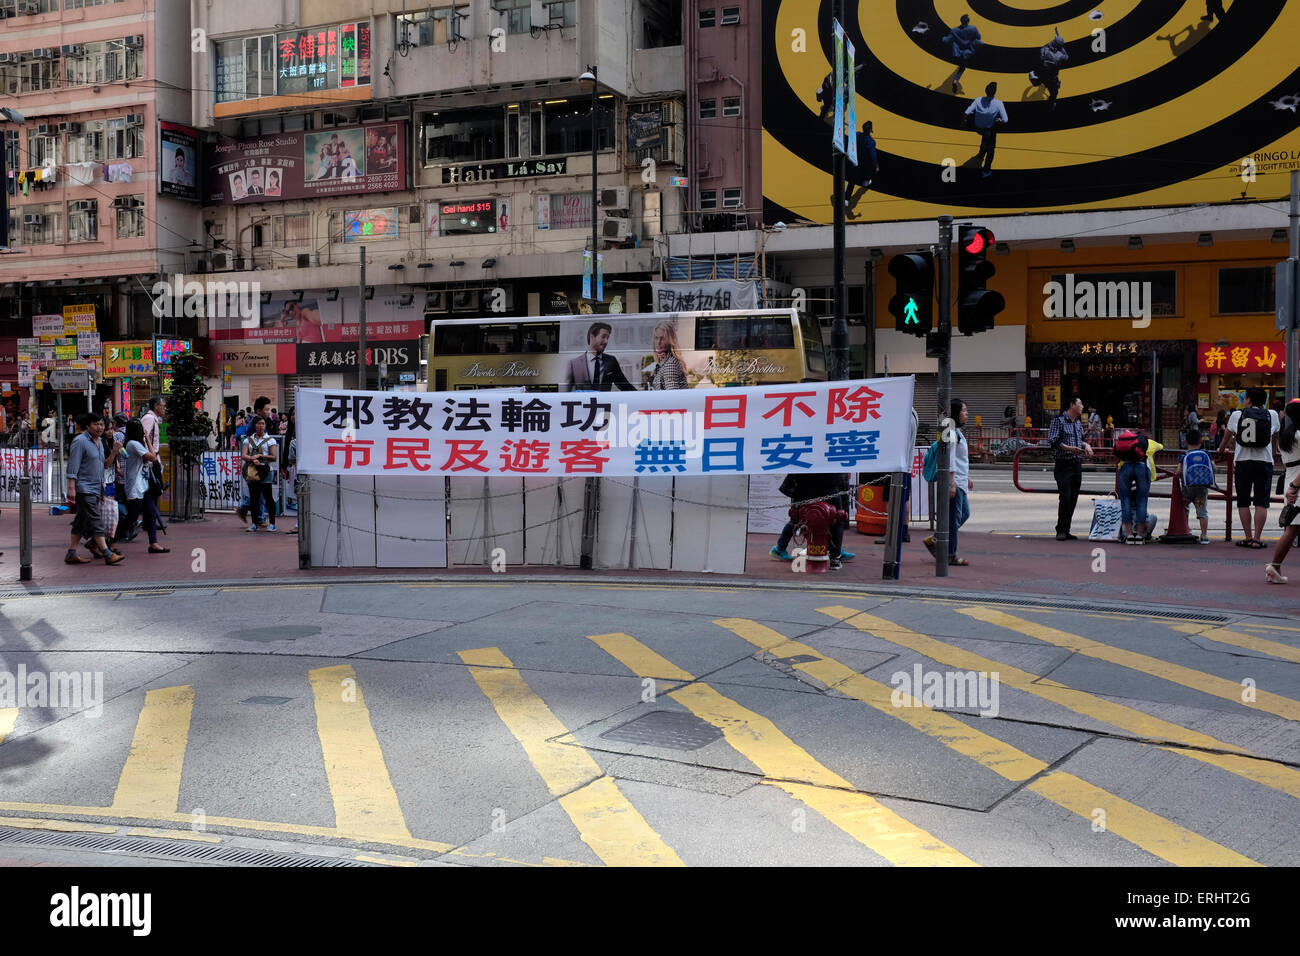 Anti Hong Kong Chief Executive Leung Chun-ying sign in Causeway Bay, Hong Kong Stock Photo